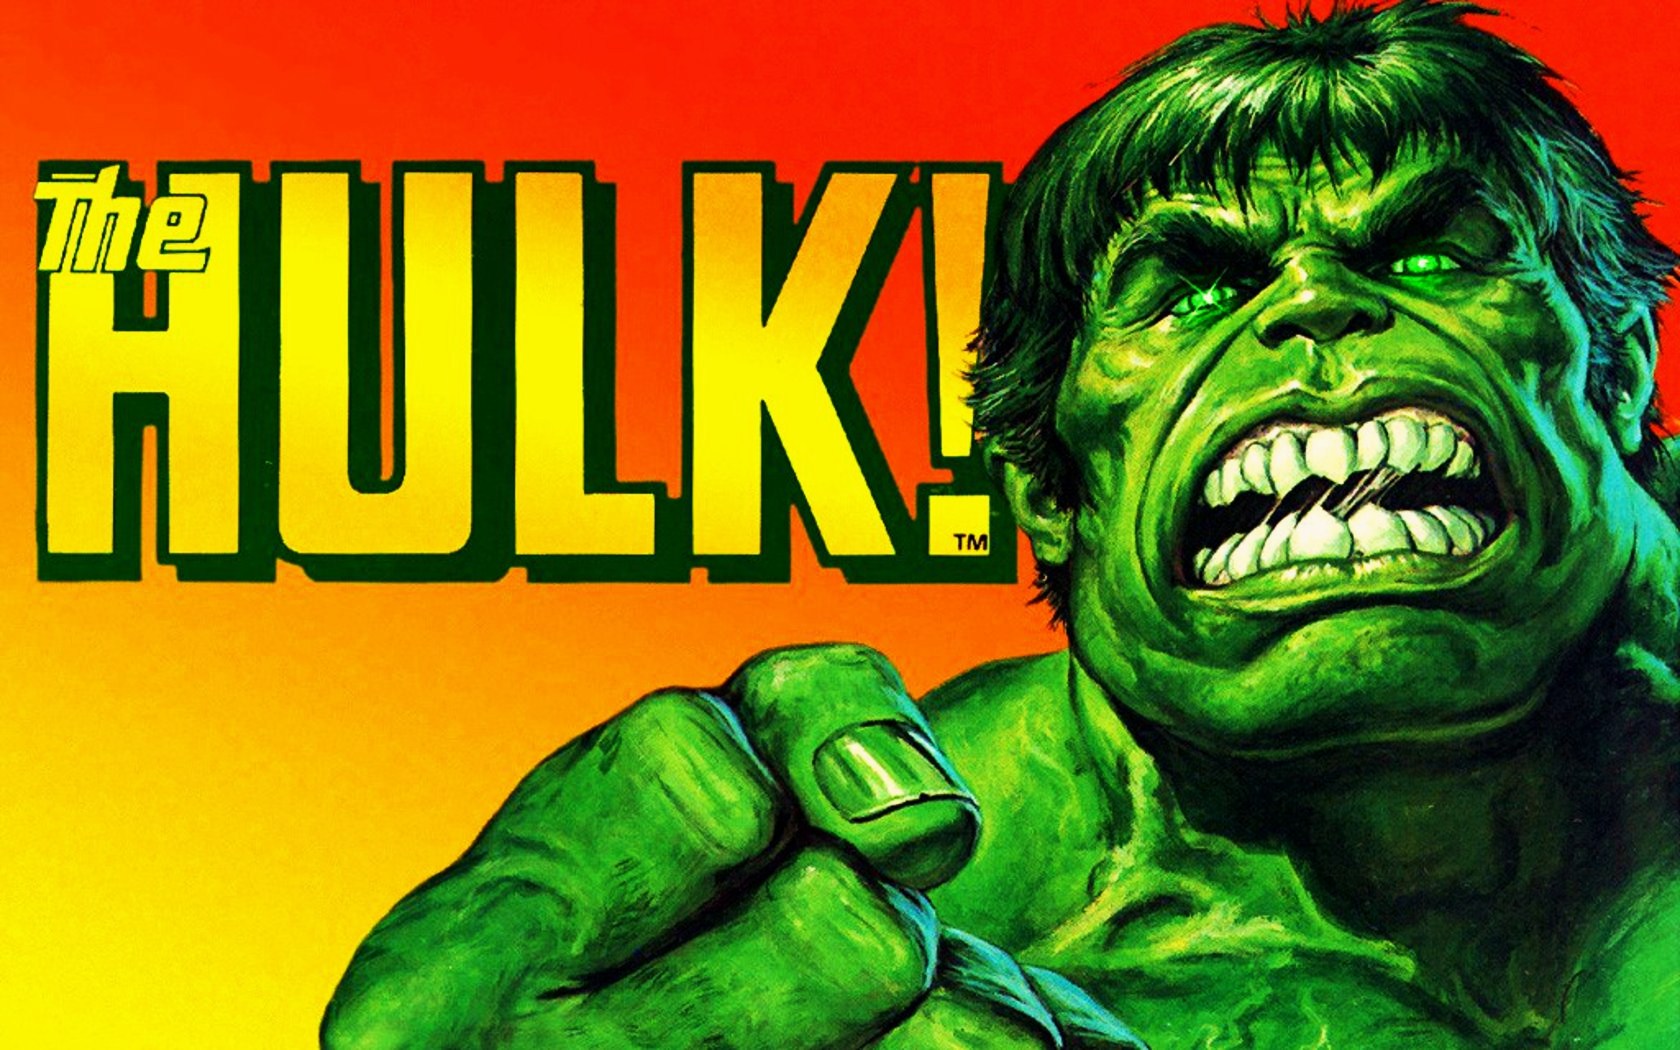 The Hulk Wallpaper - The Incredible Hulk Wallpaper 31051334 - Fanpop